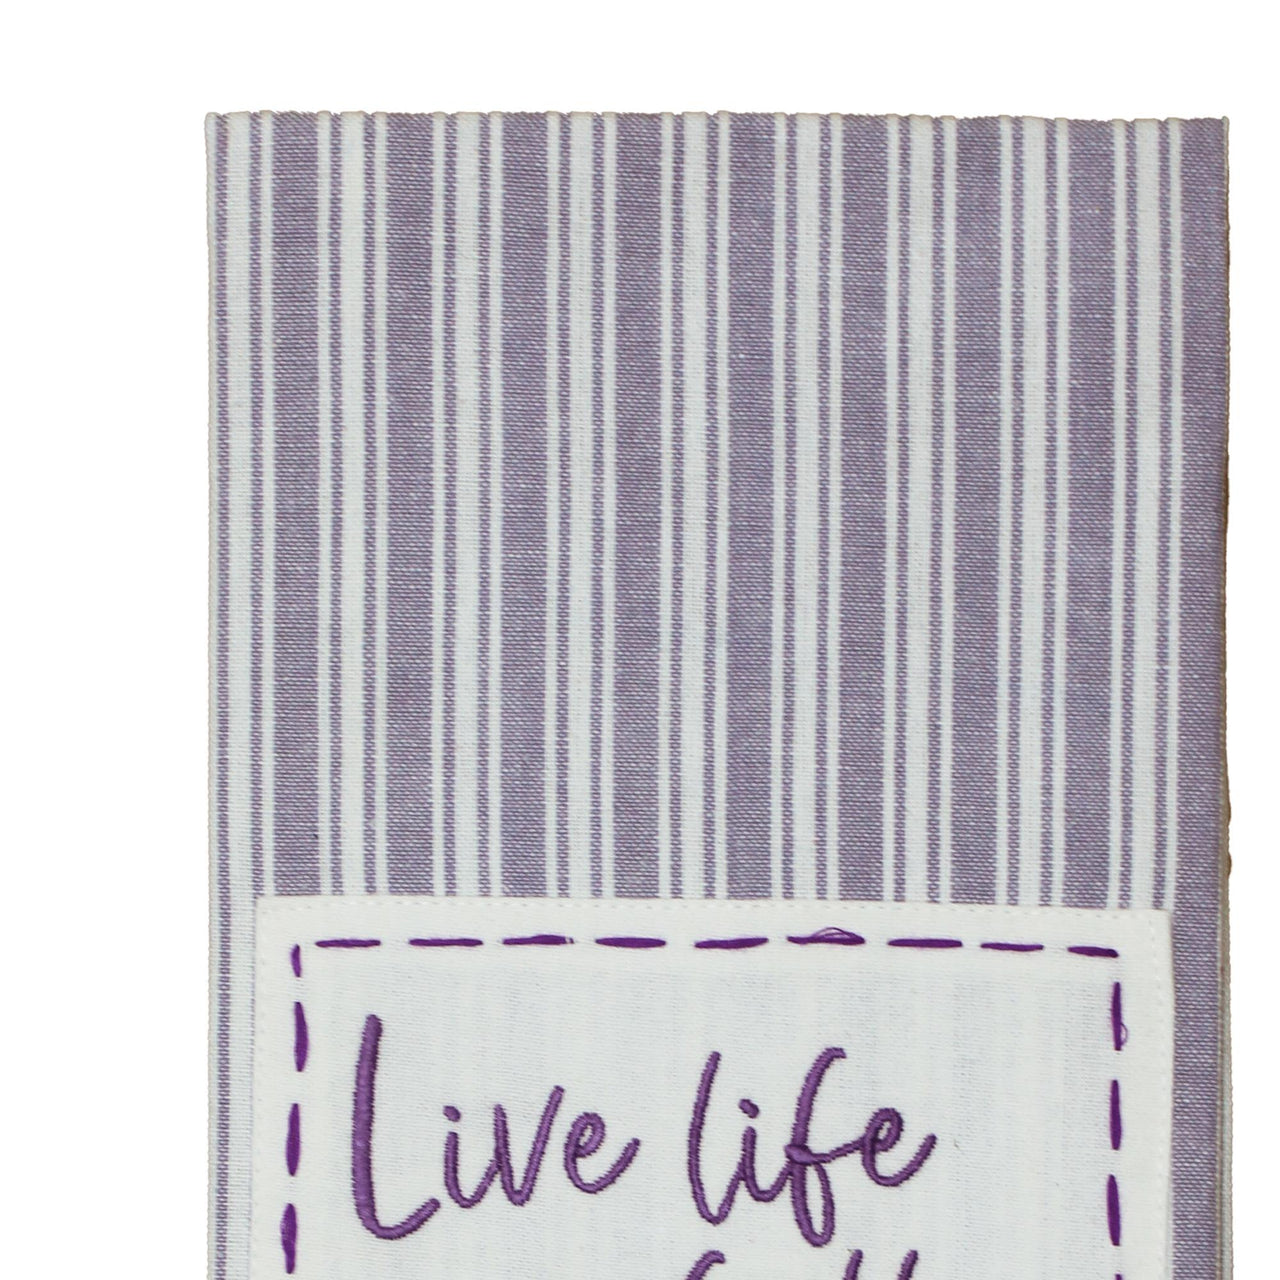 Live Life in Full Bloom Towel ET000043